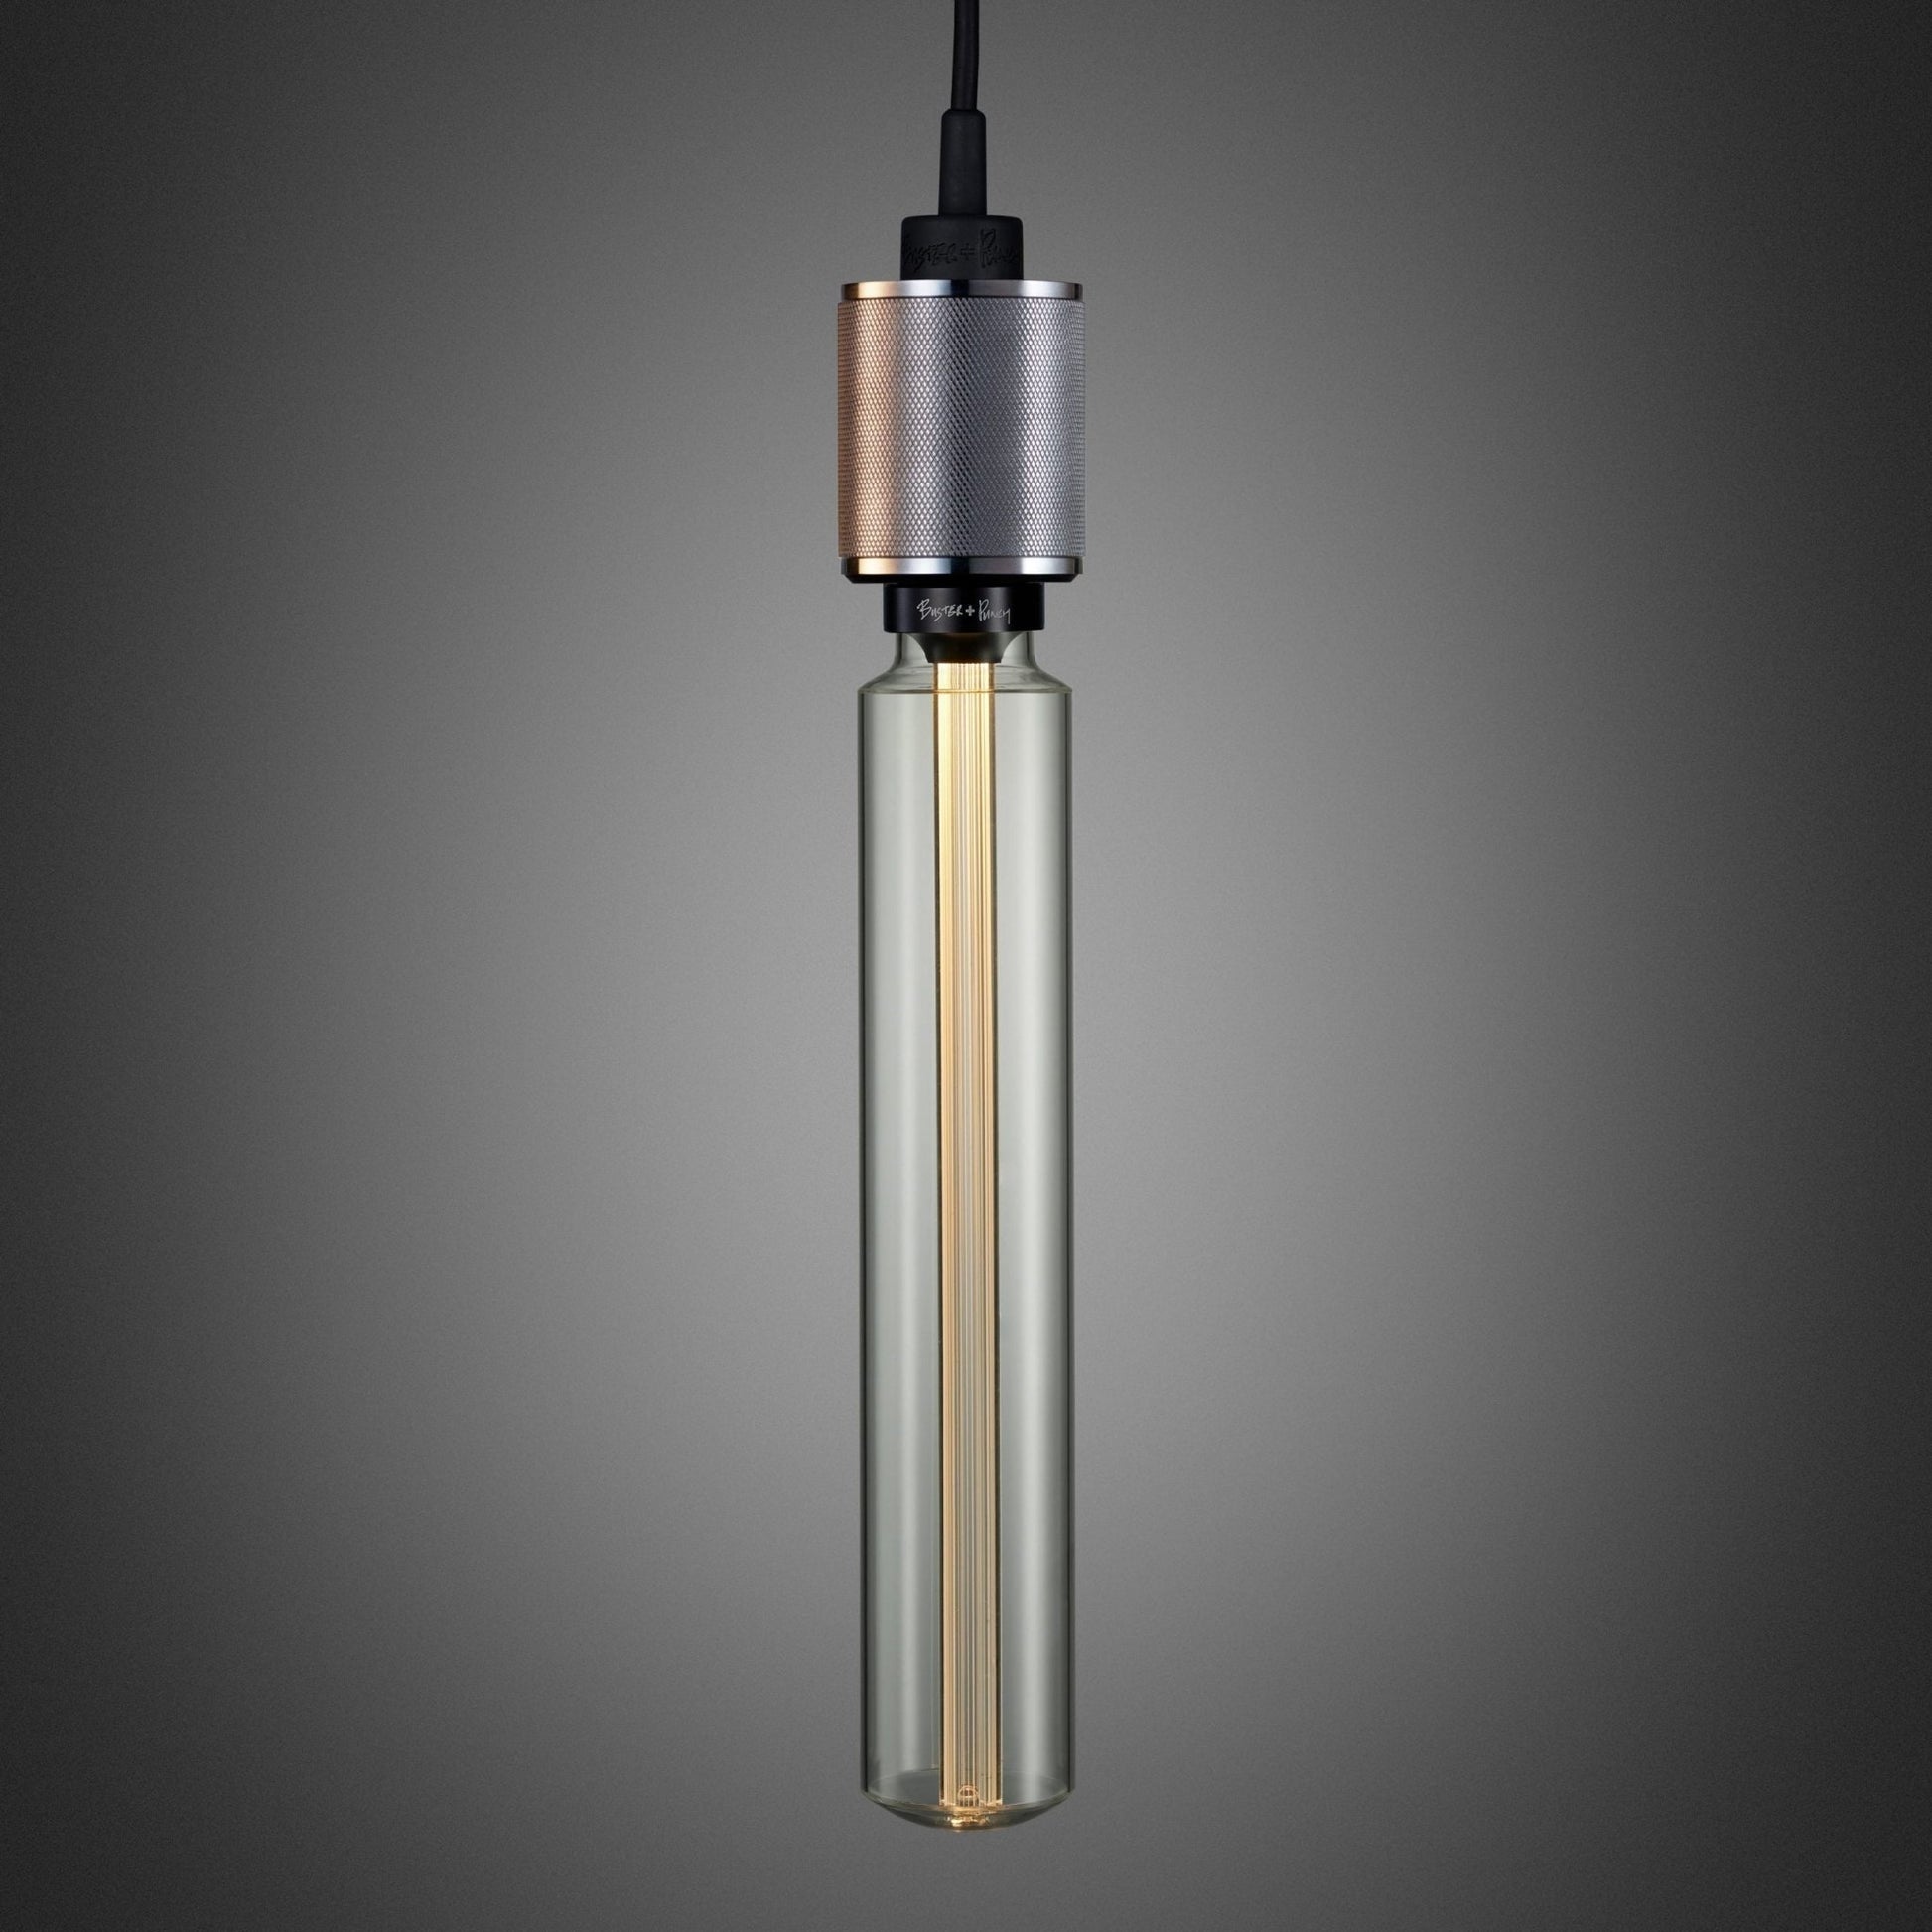 Industrial Pendant Light HEAVY METAL / STEEL - |VESIMI Design| Luxury and Rustic bathrooms online